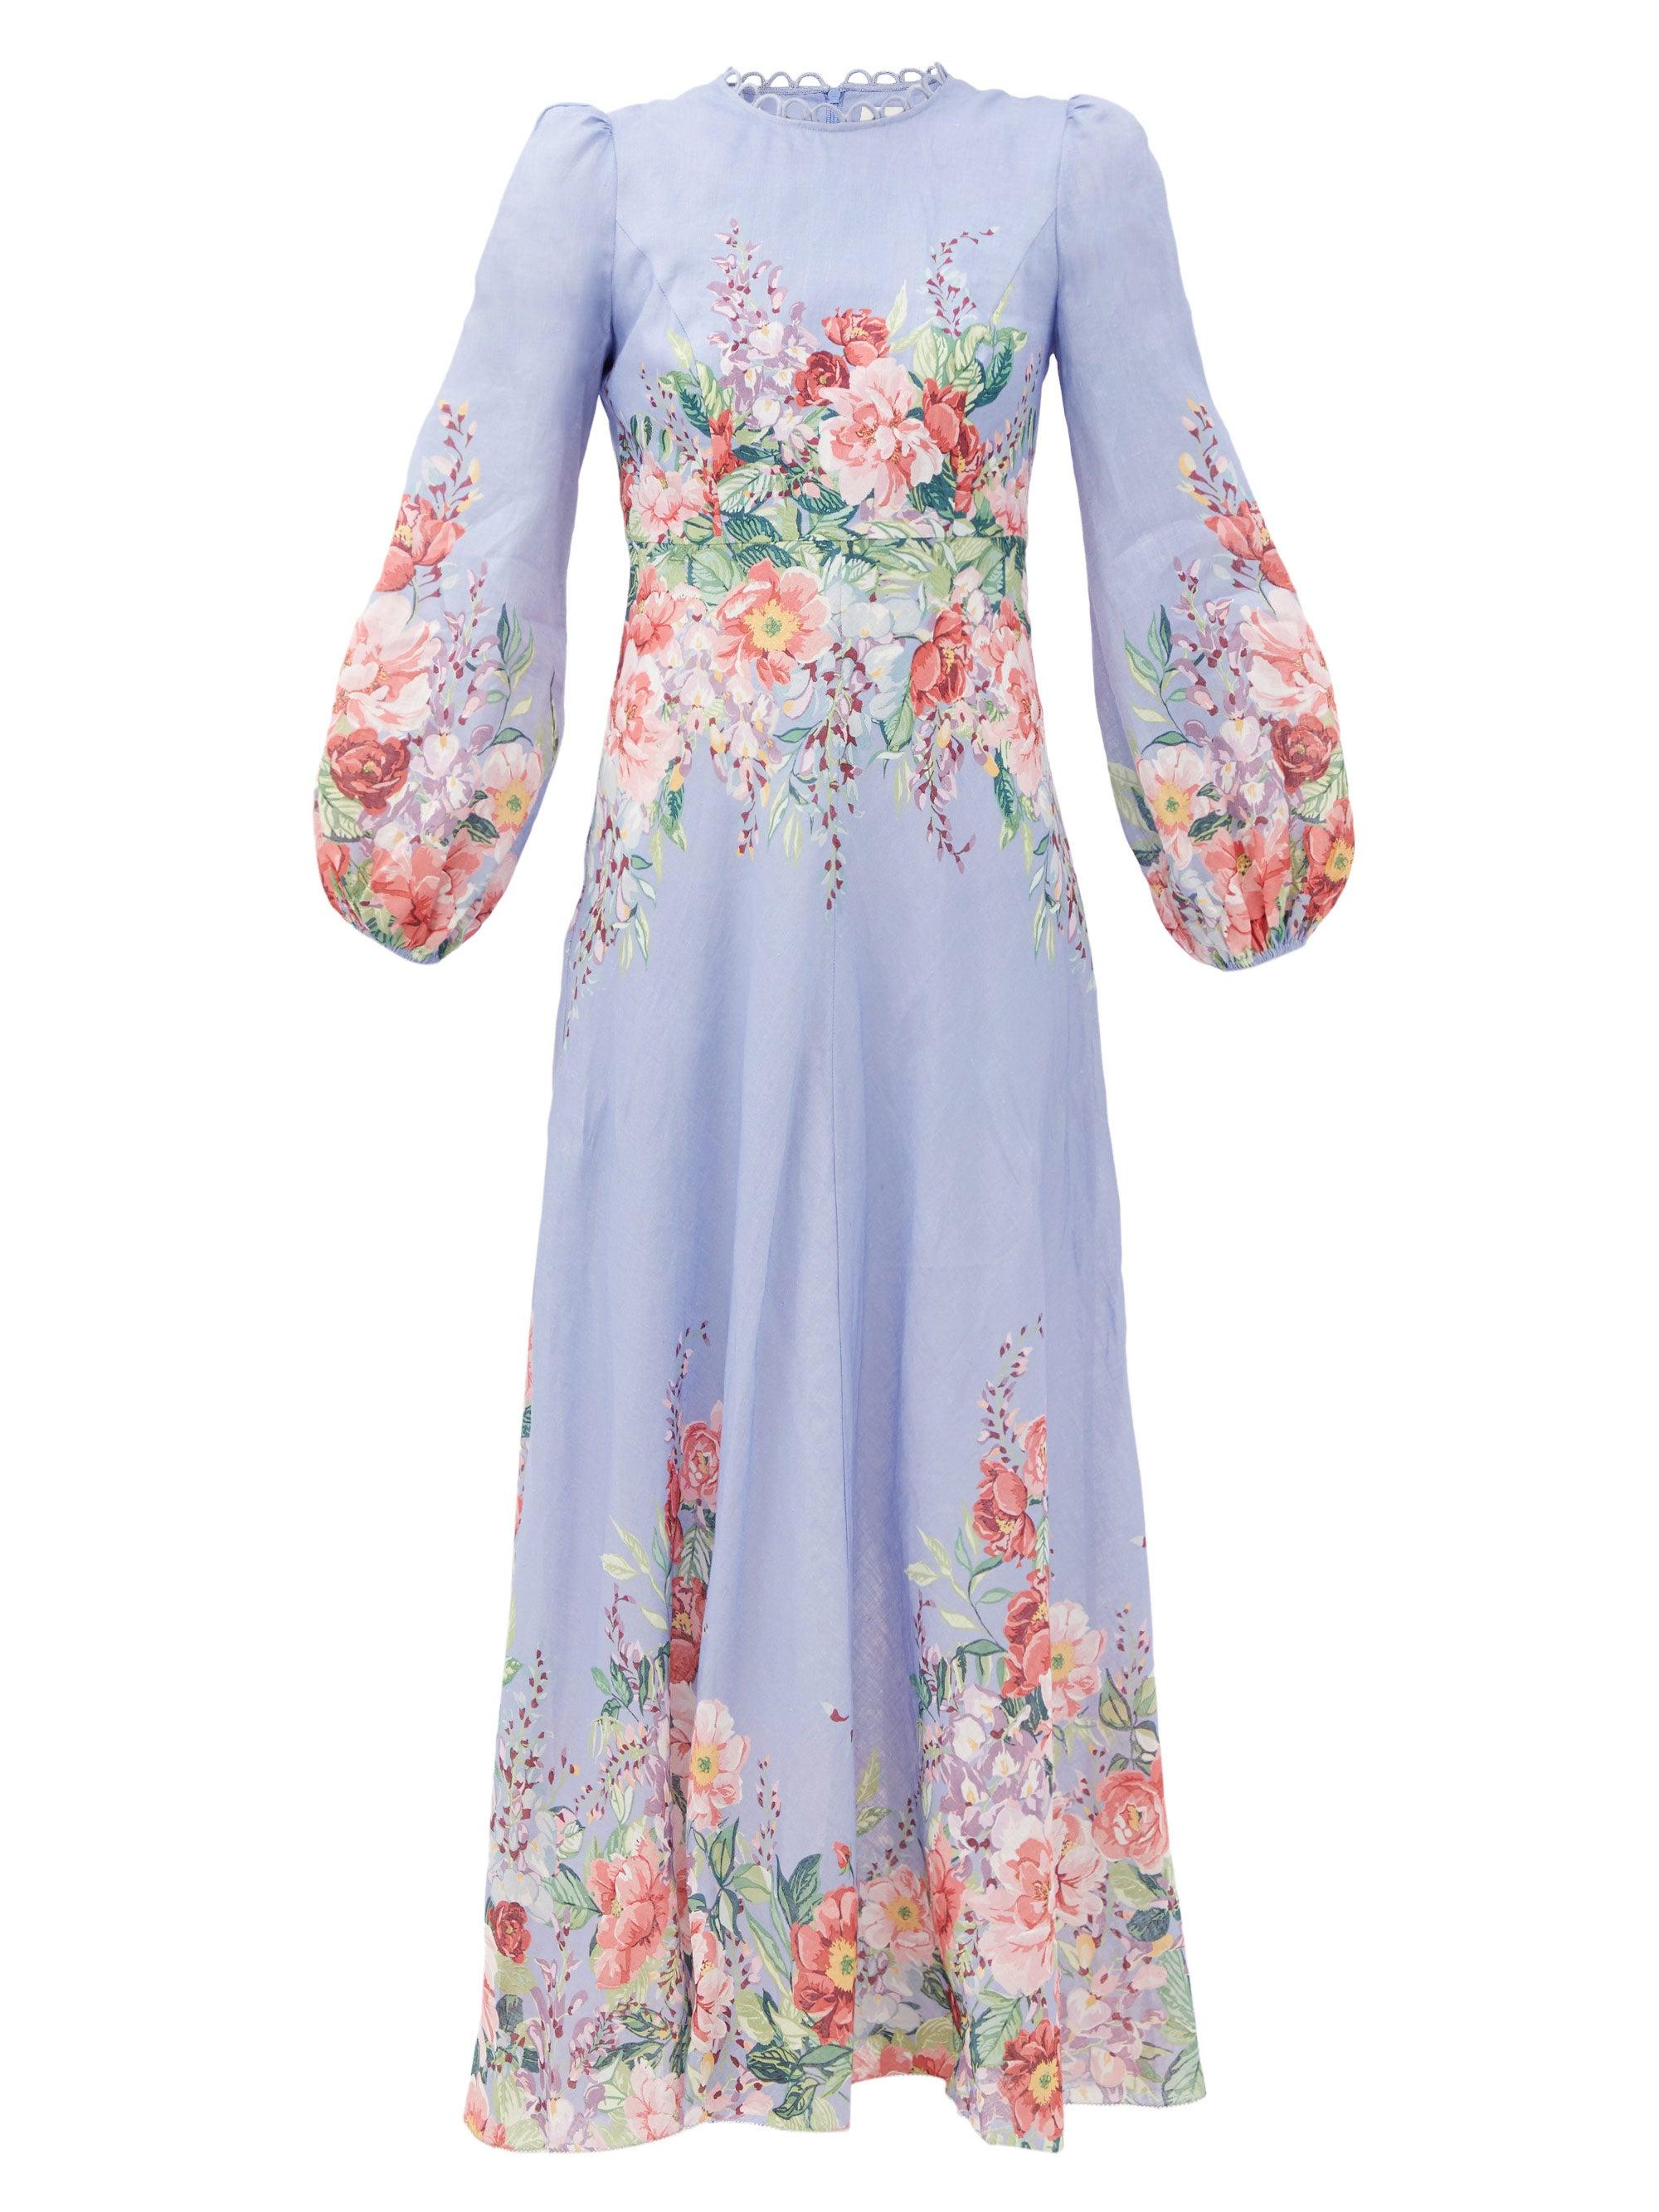 Zimmermann Bellitude Floral-print Linen Dress in Blue Print (Blue) - Lyst